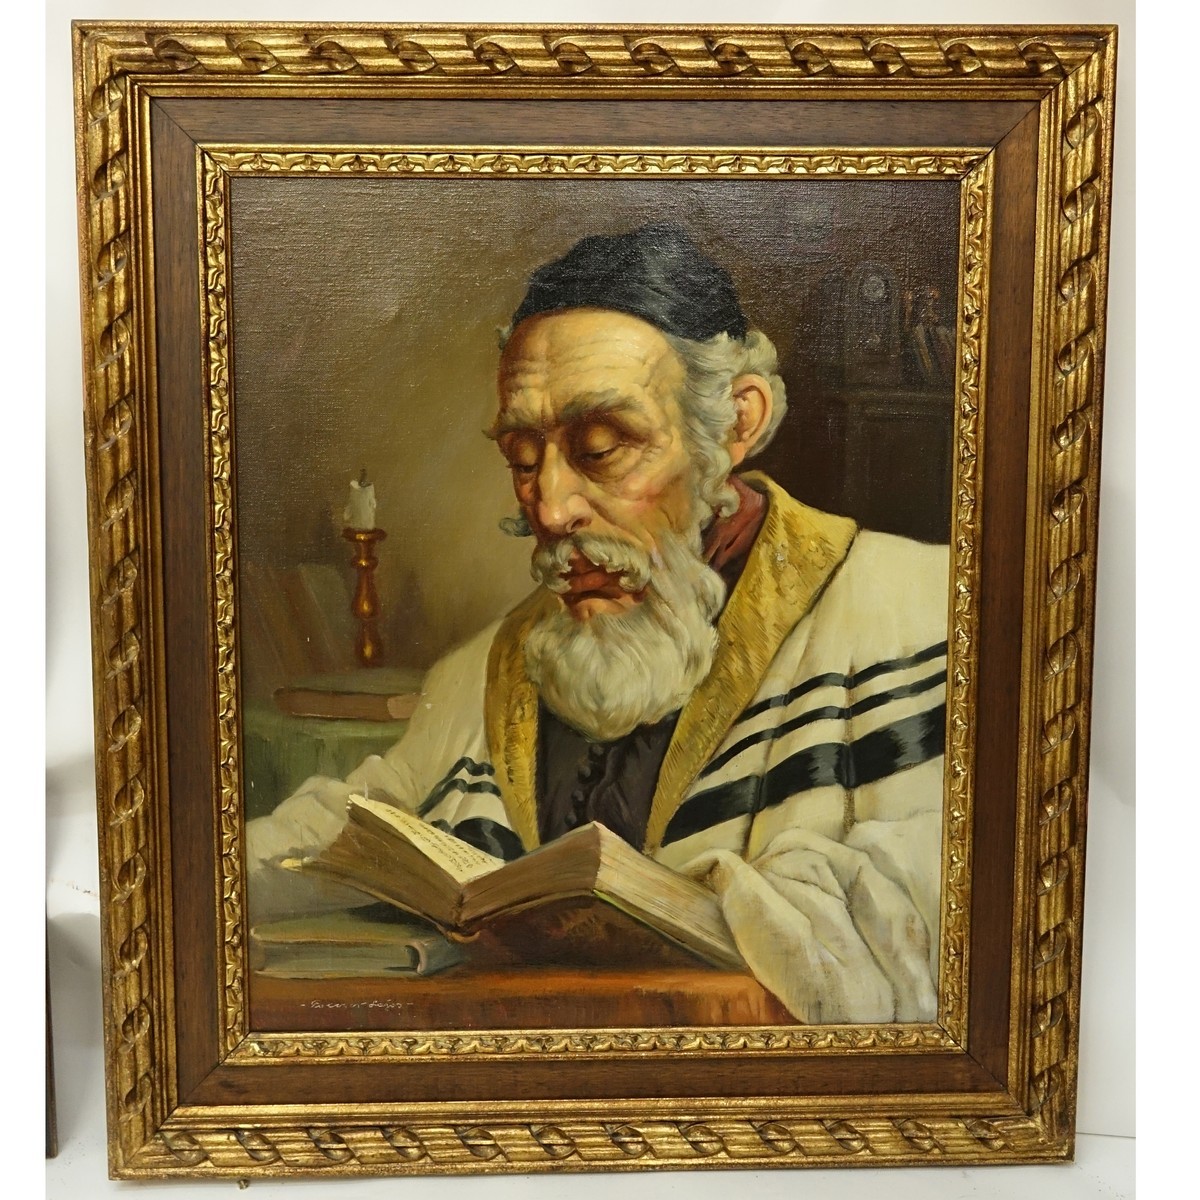 Poleser, Hungarian (20th C) Oil on Canvas, Portrait of a Religious Man, Signed Lower Left. COA en verso.